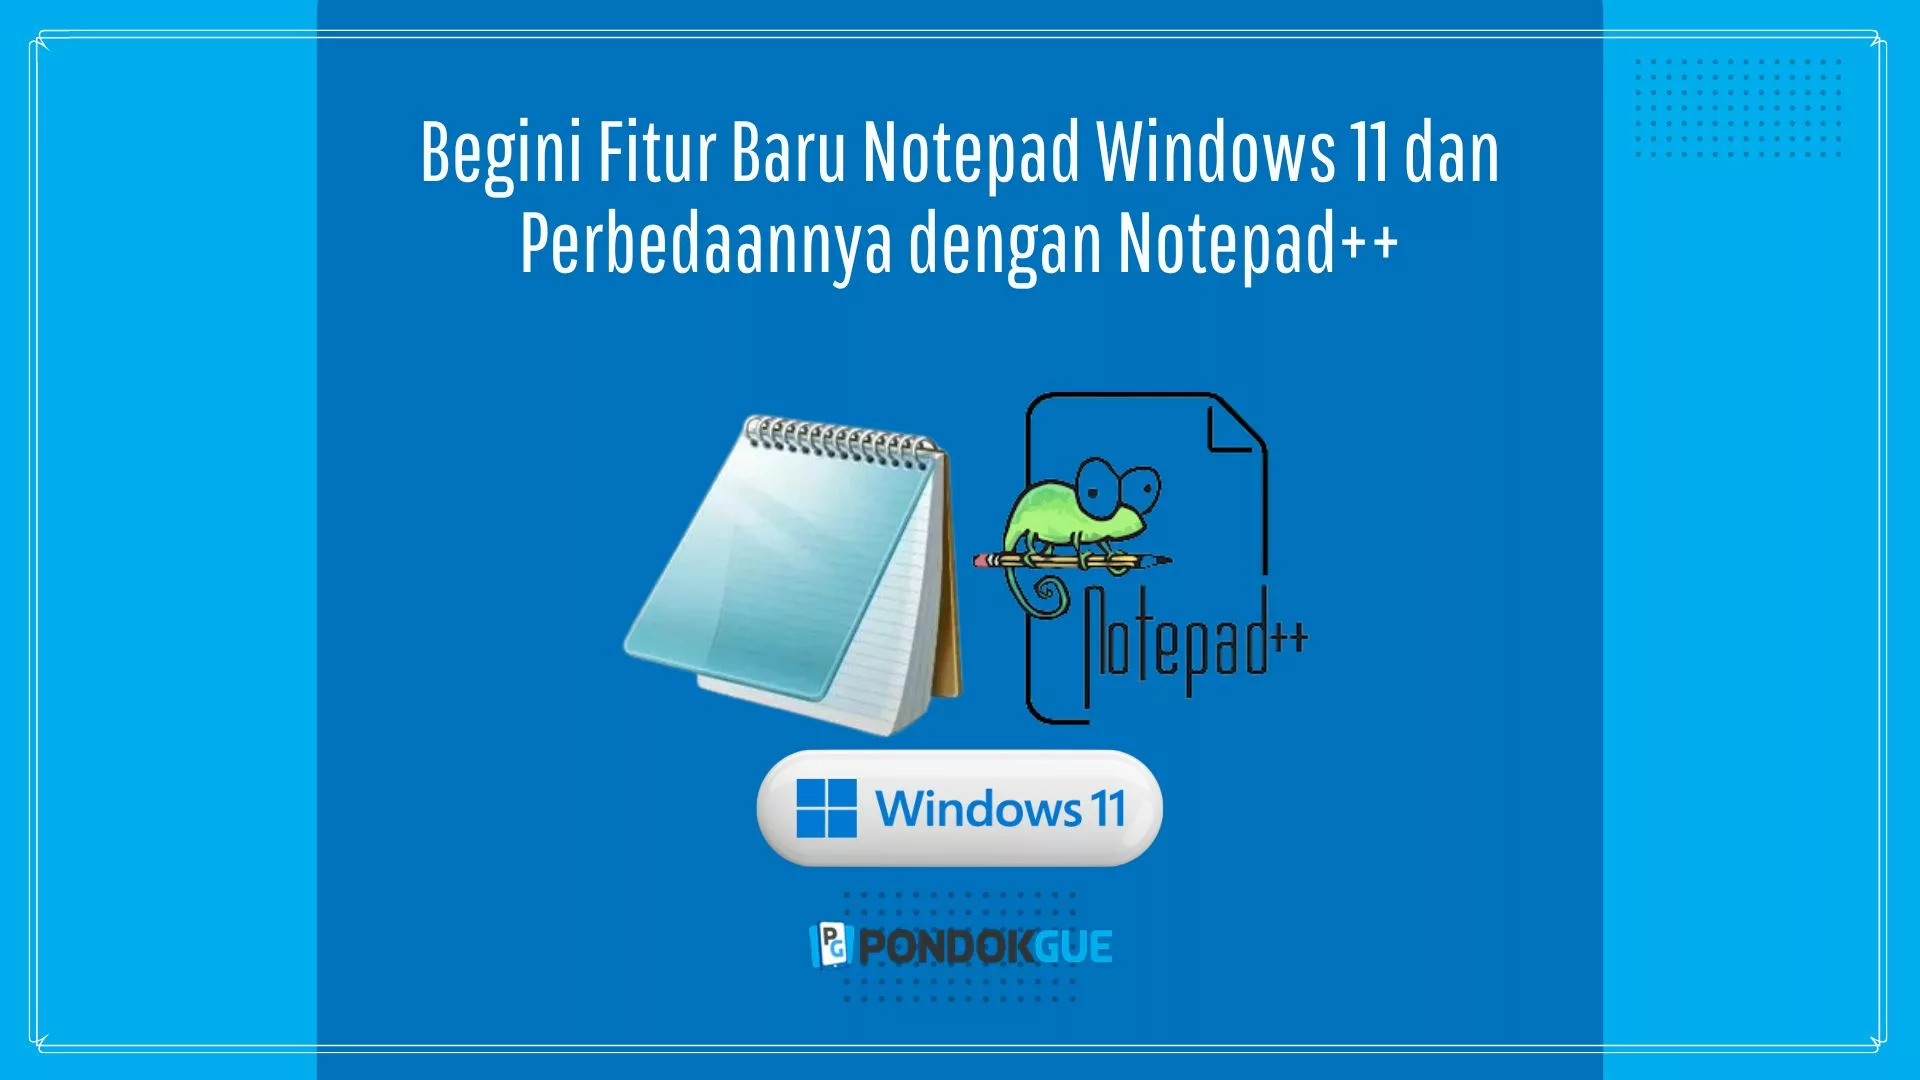 Begini Fitur Baru Notepad Windows 11 - Pondokgue.com